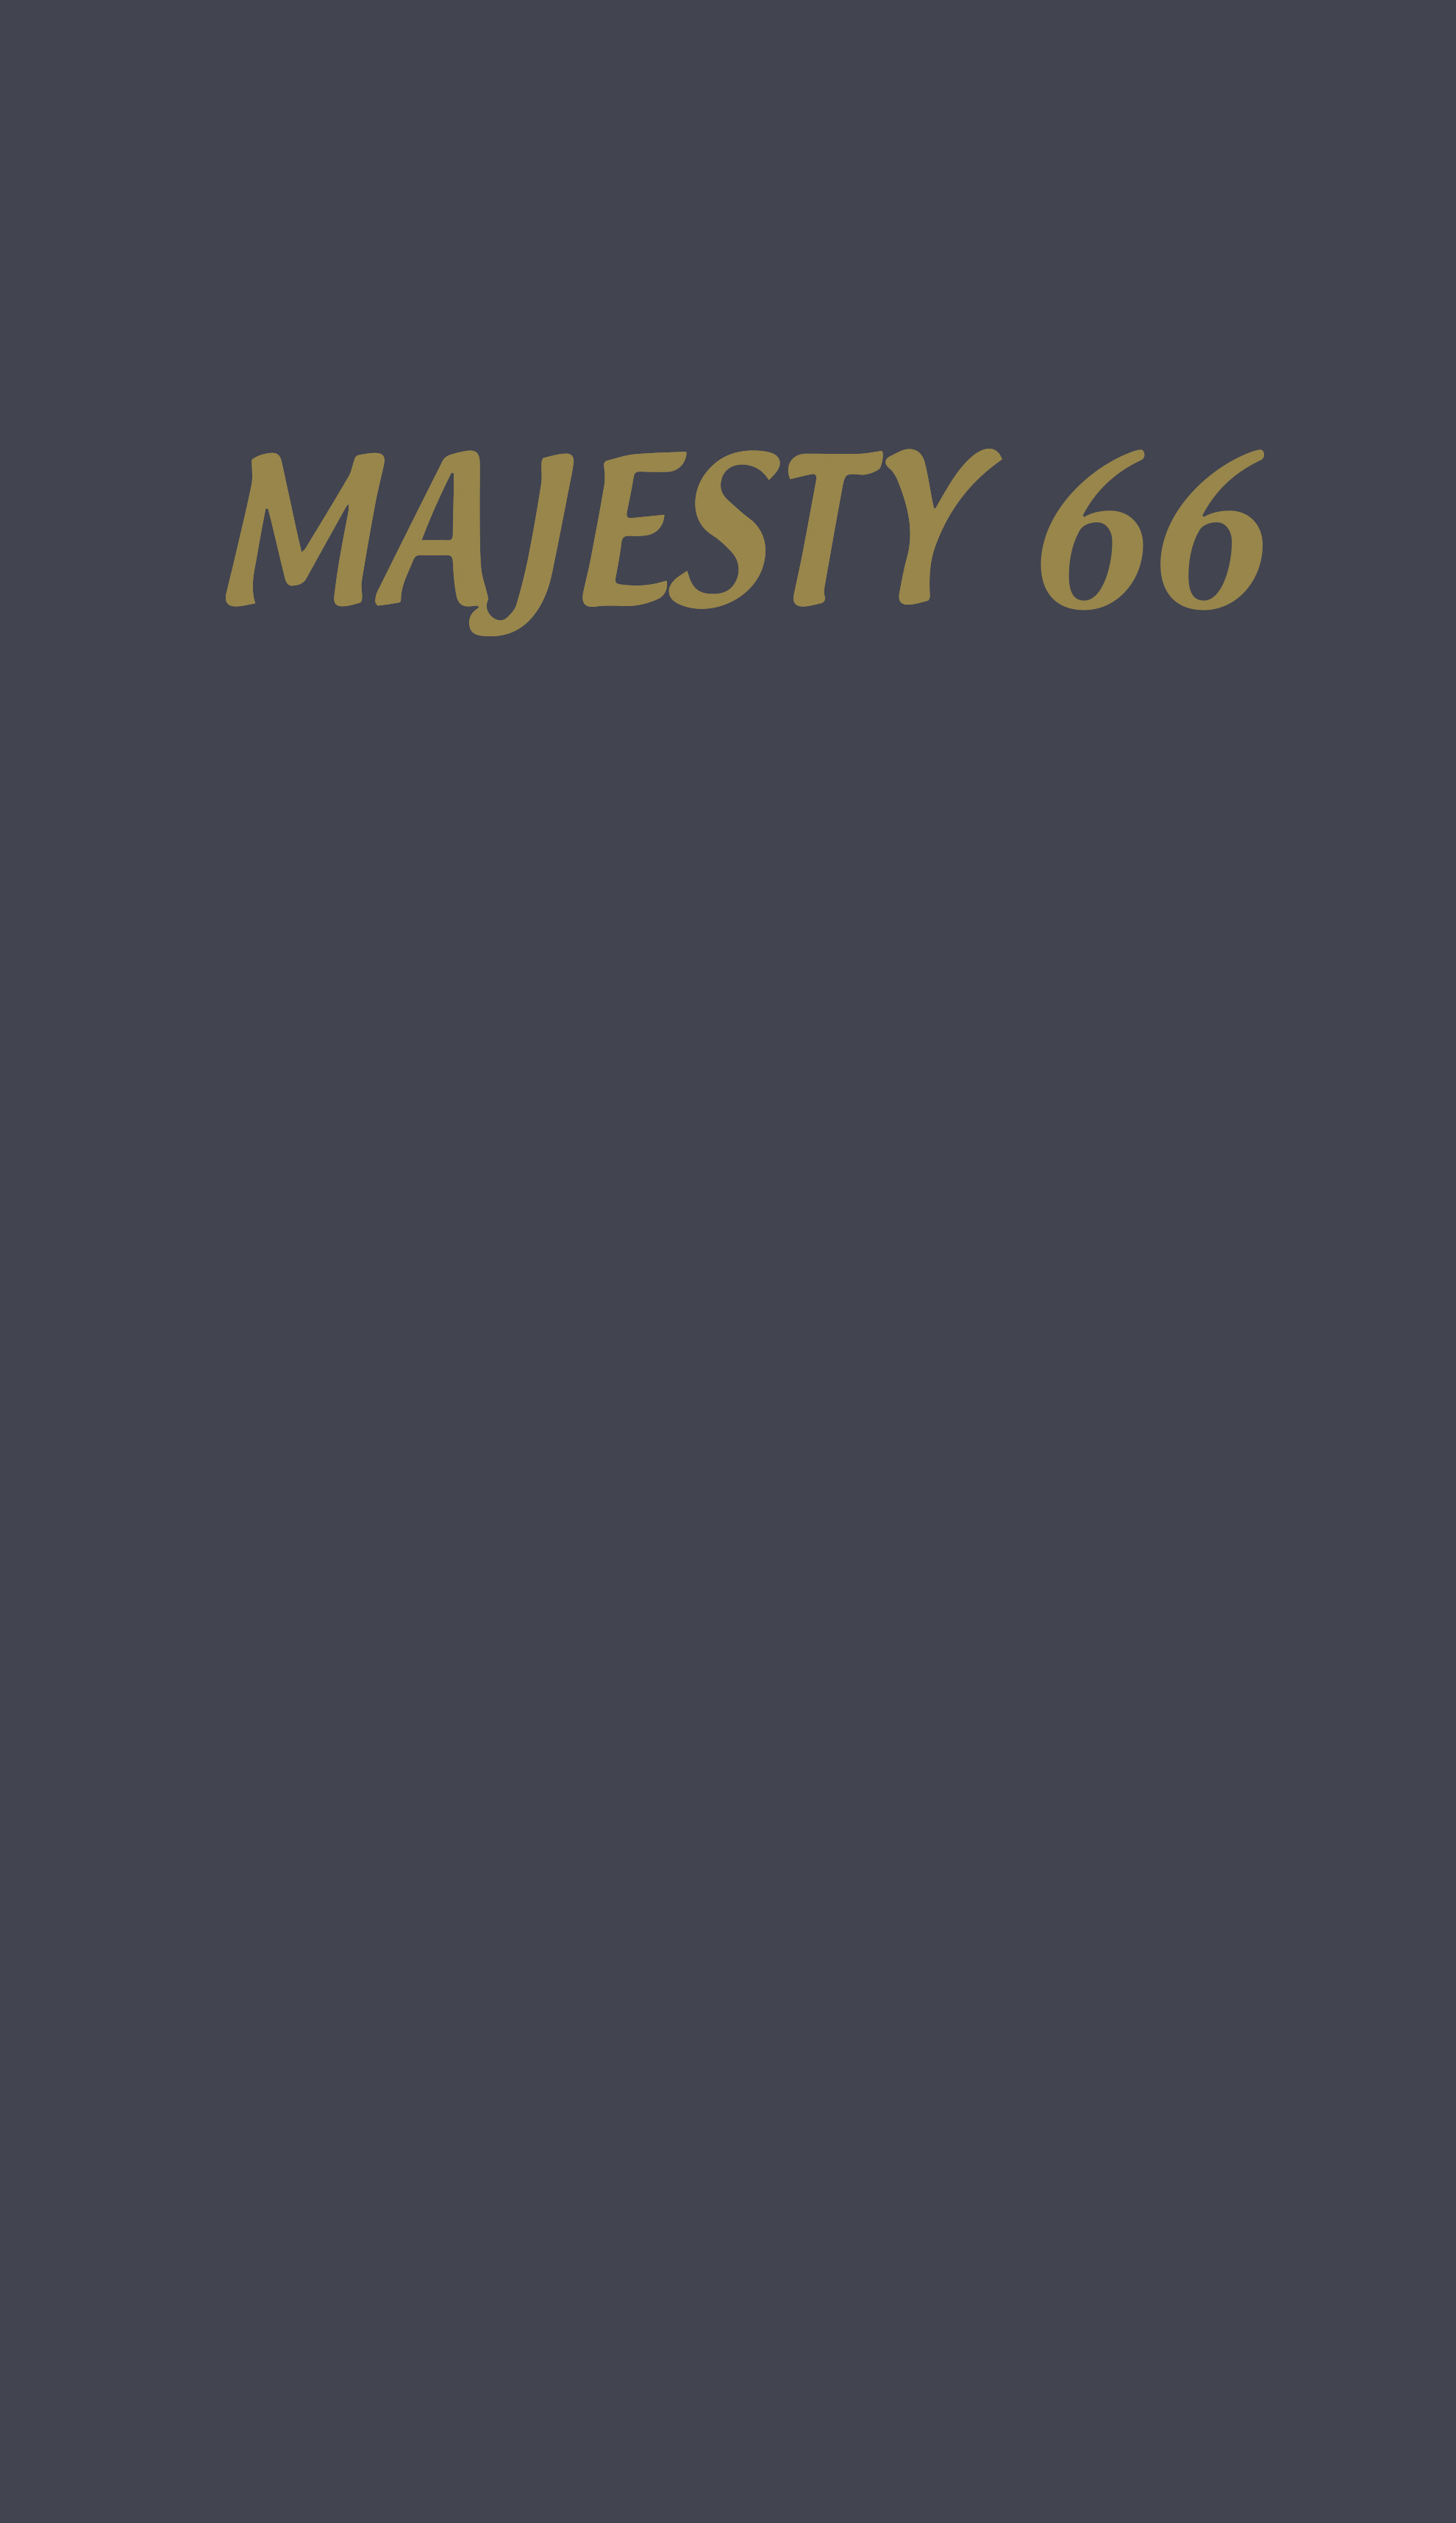 Magesty 66